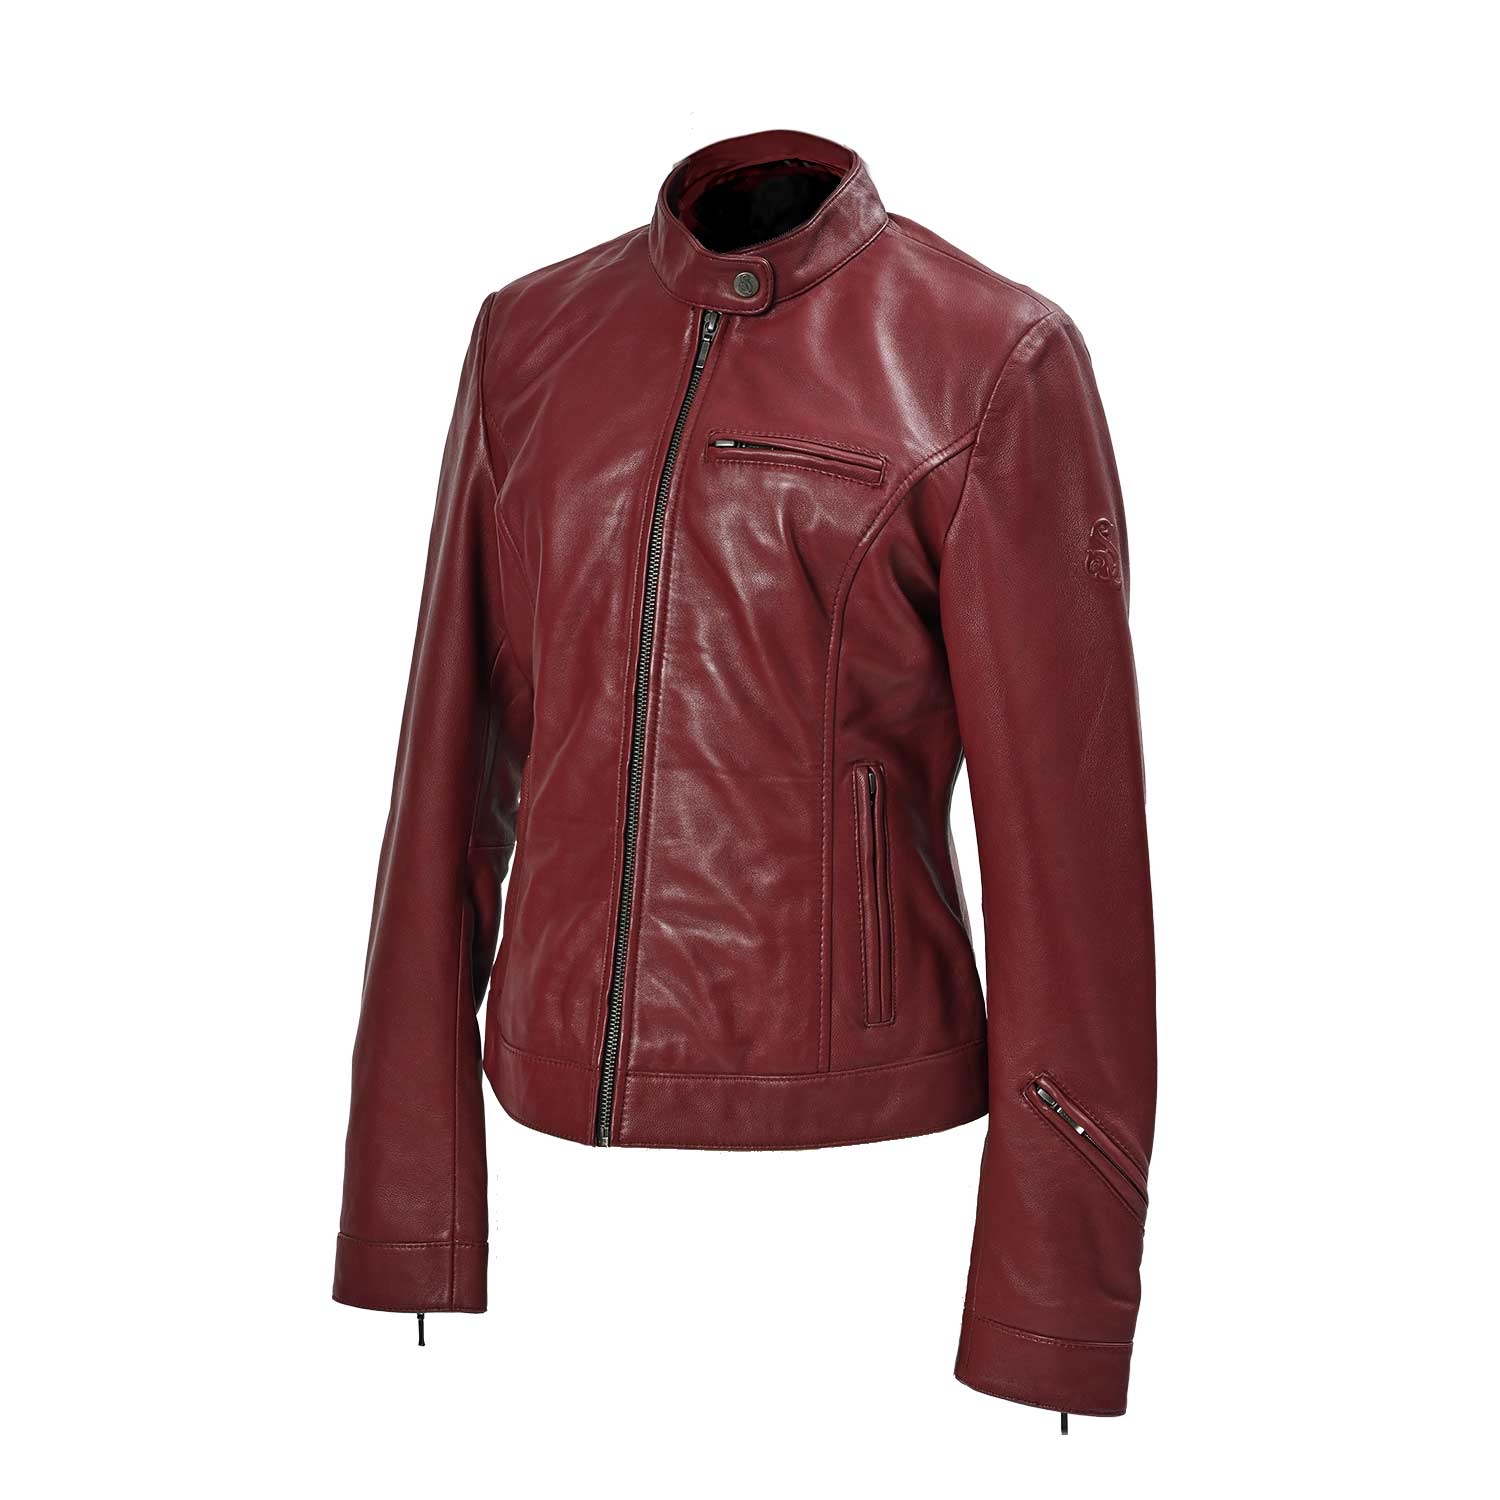 SugarRidez HEARTS JACKET WINE RED Women's Leather Jacket SLJ203 